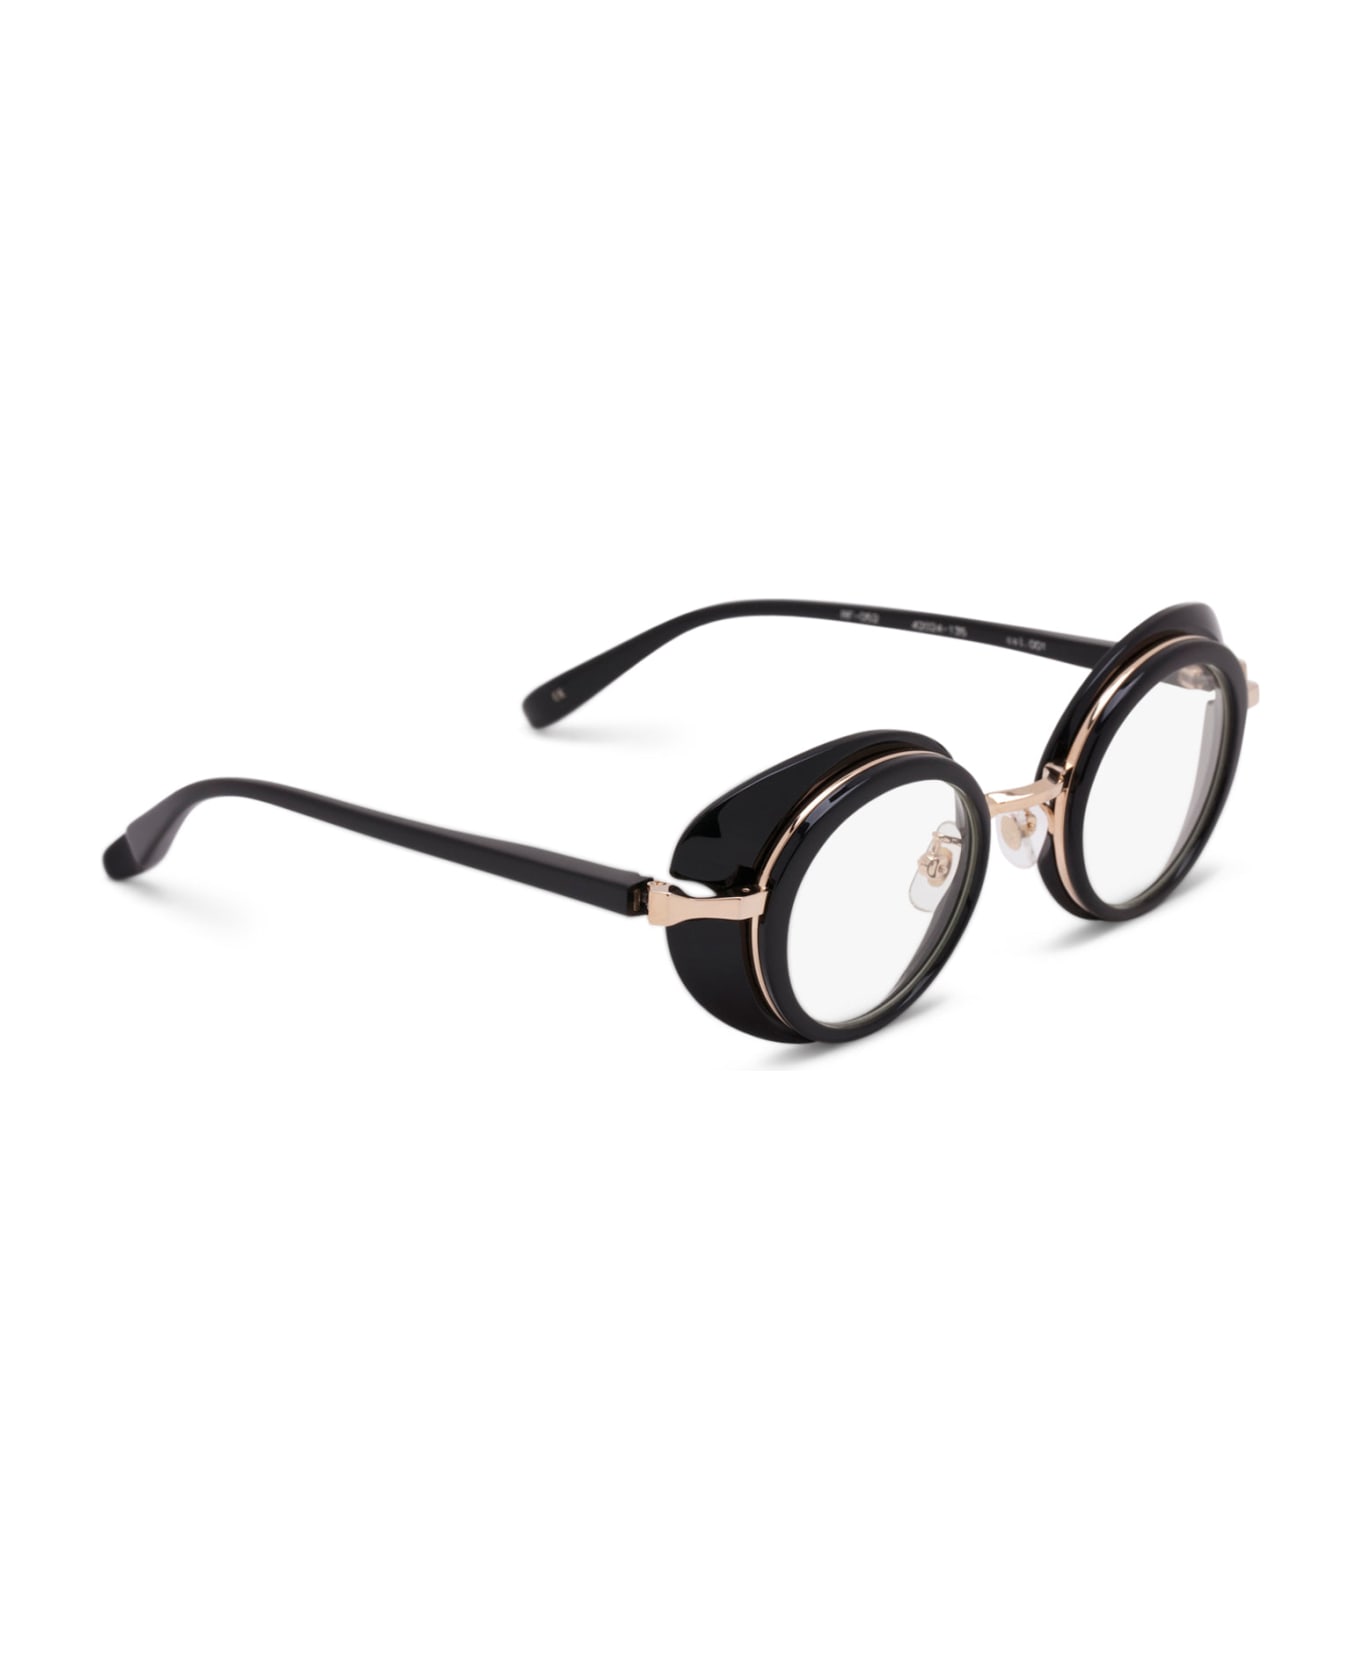 FACTORY900 Rf 052-001 Glasses - Black/gold